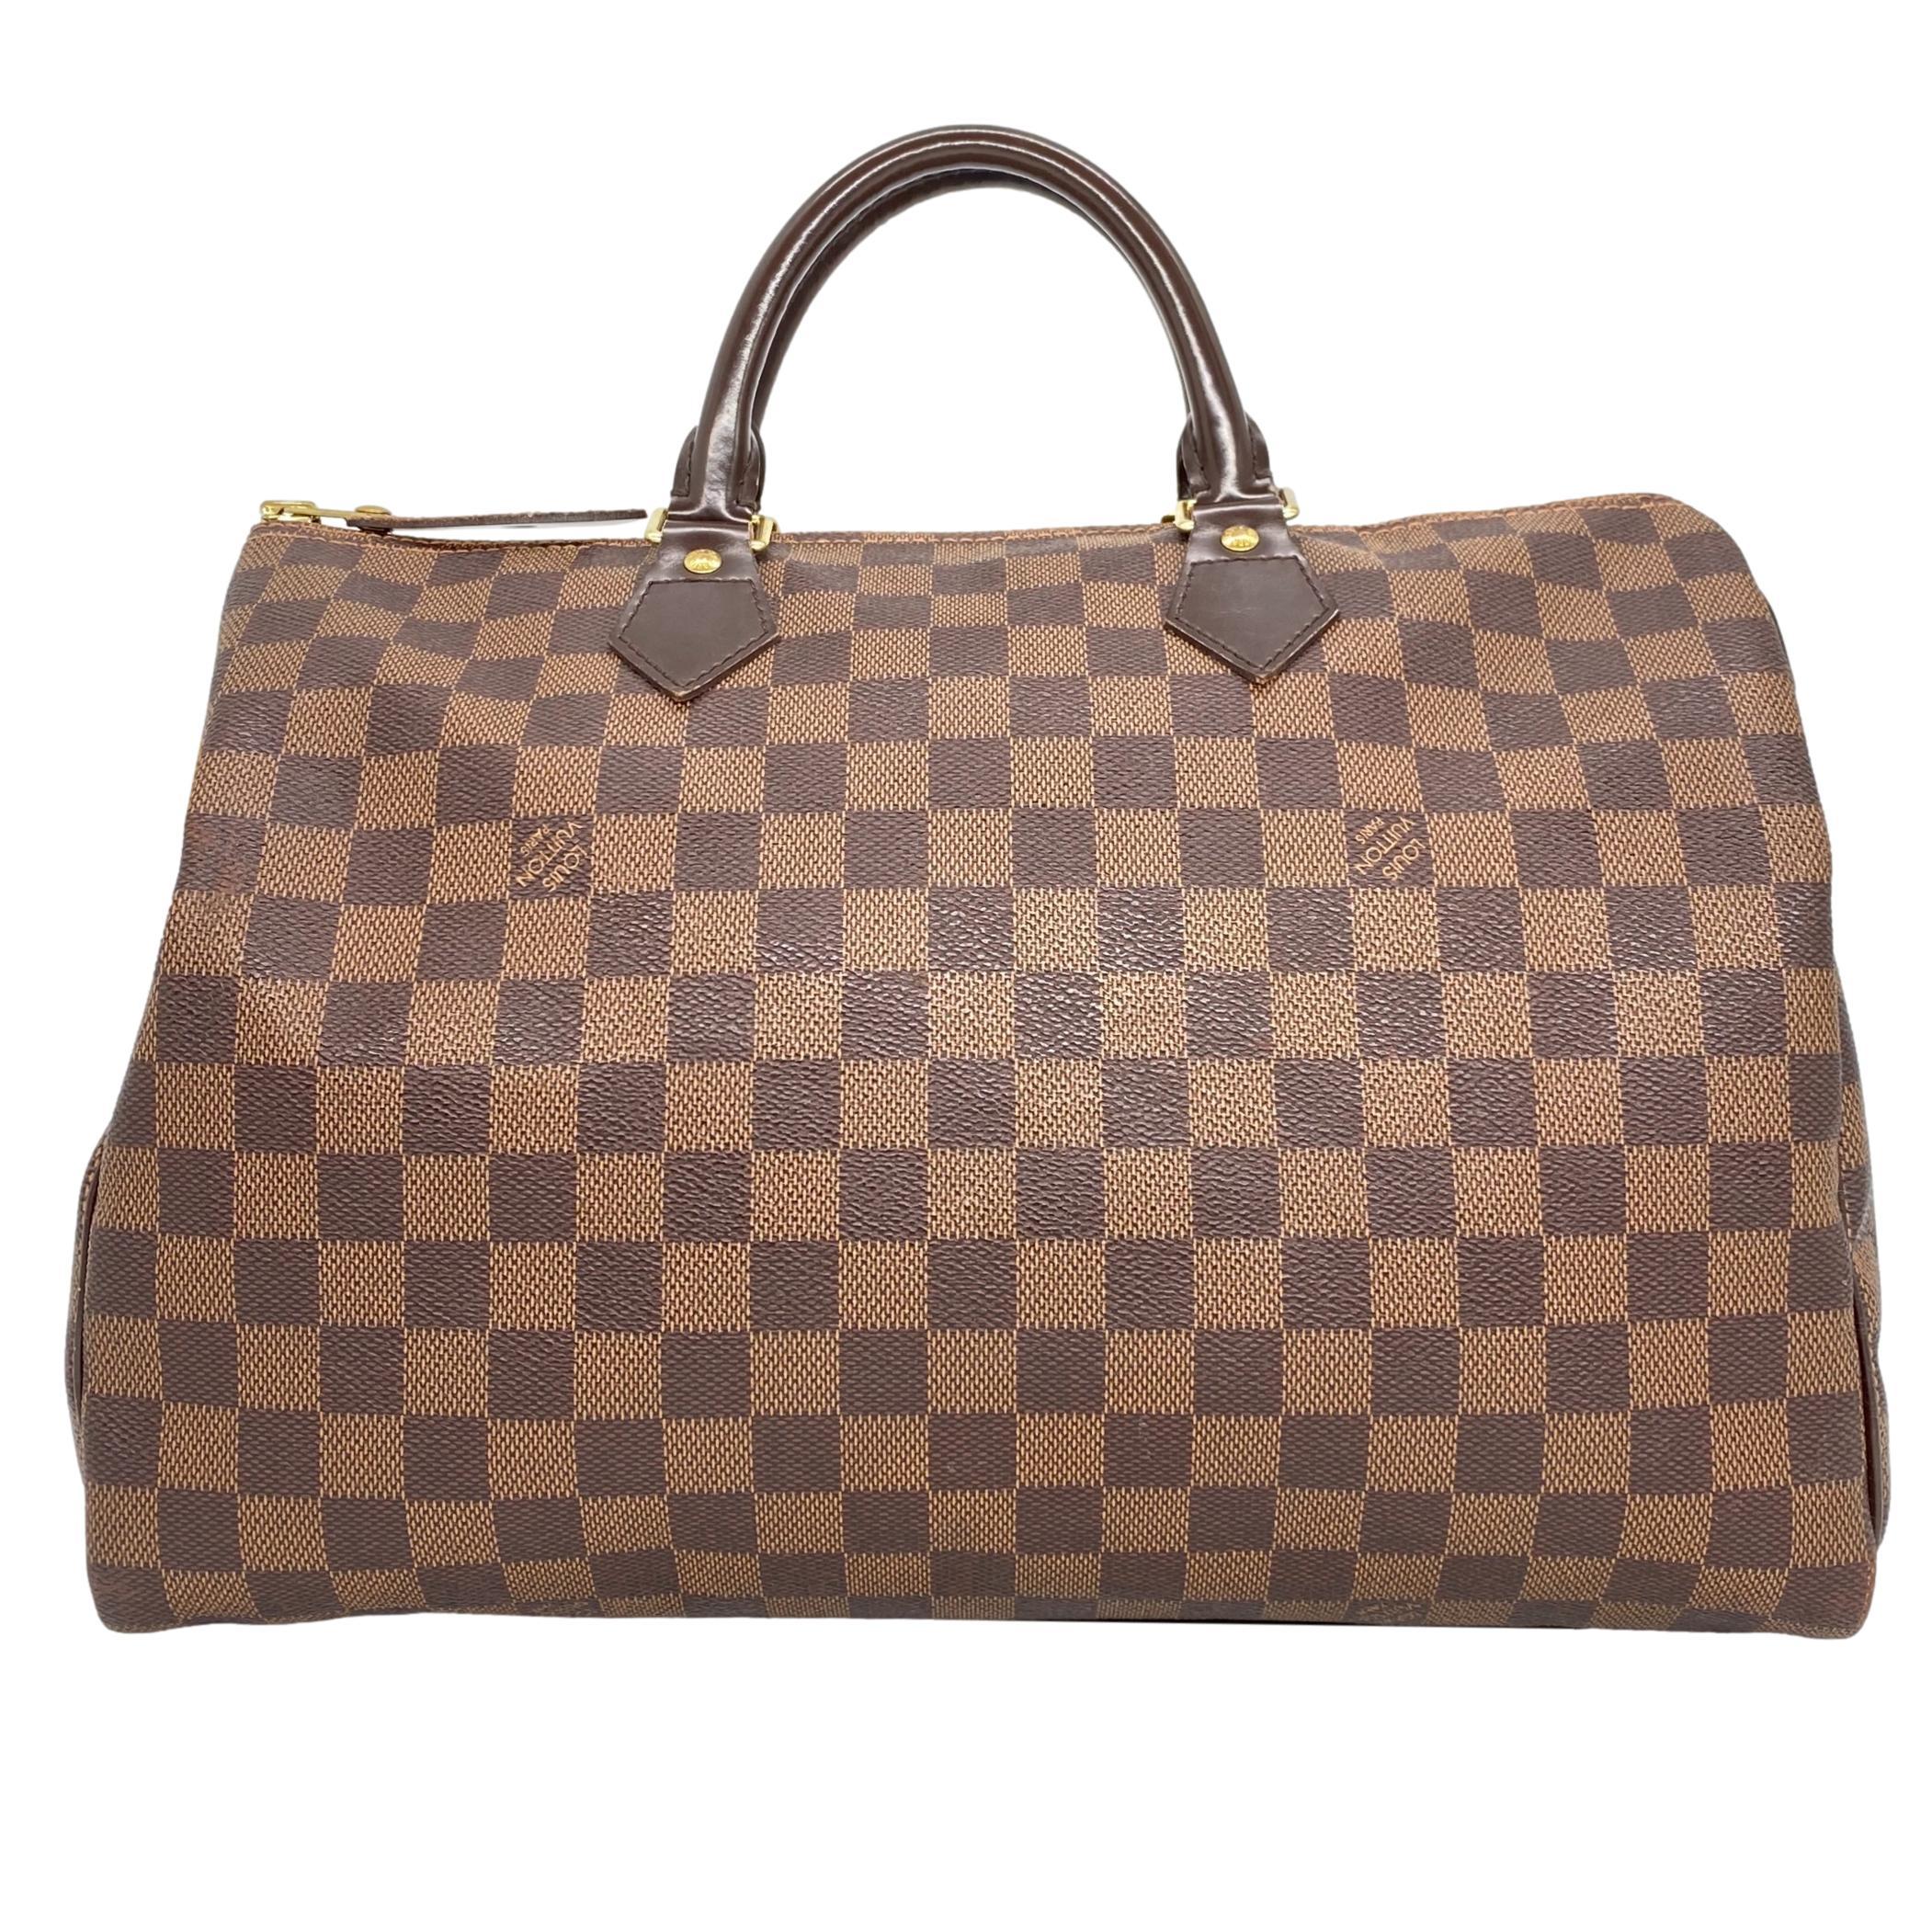 Women's or Men's Louis Vuitton Damier Ebene Speedy 35 Top Handle Bag, France 2011.